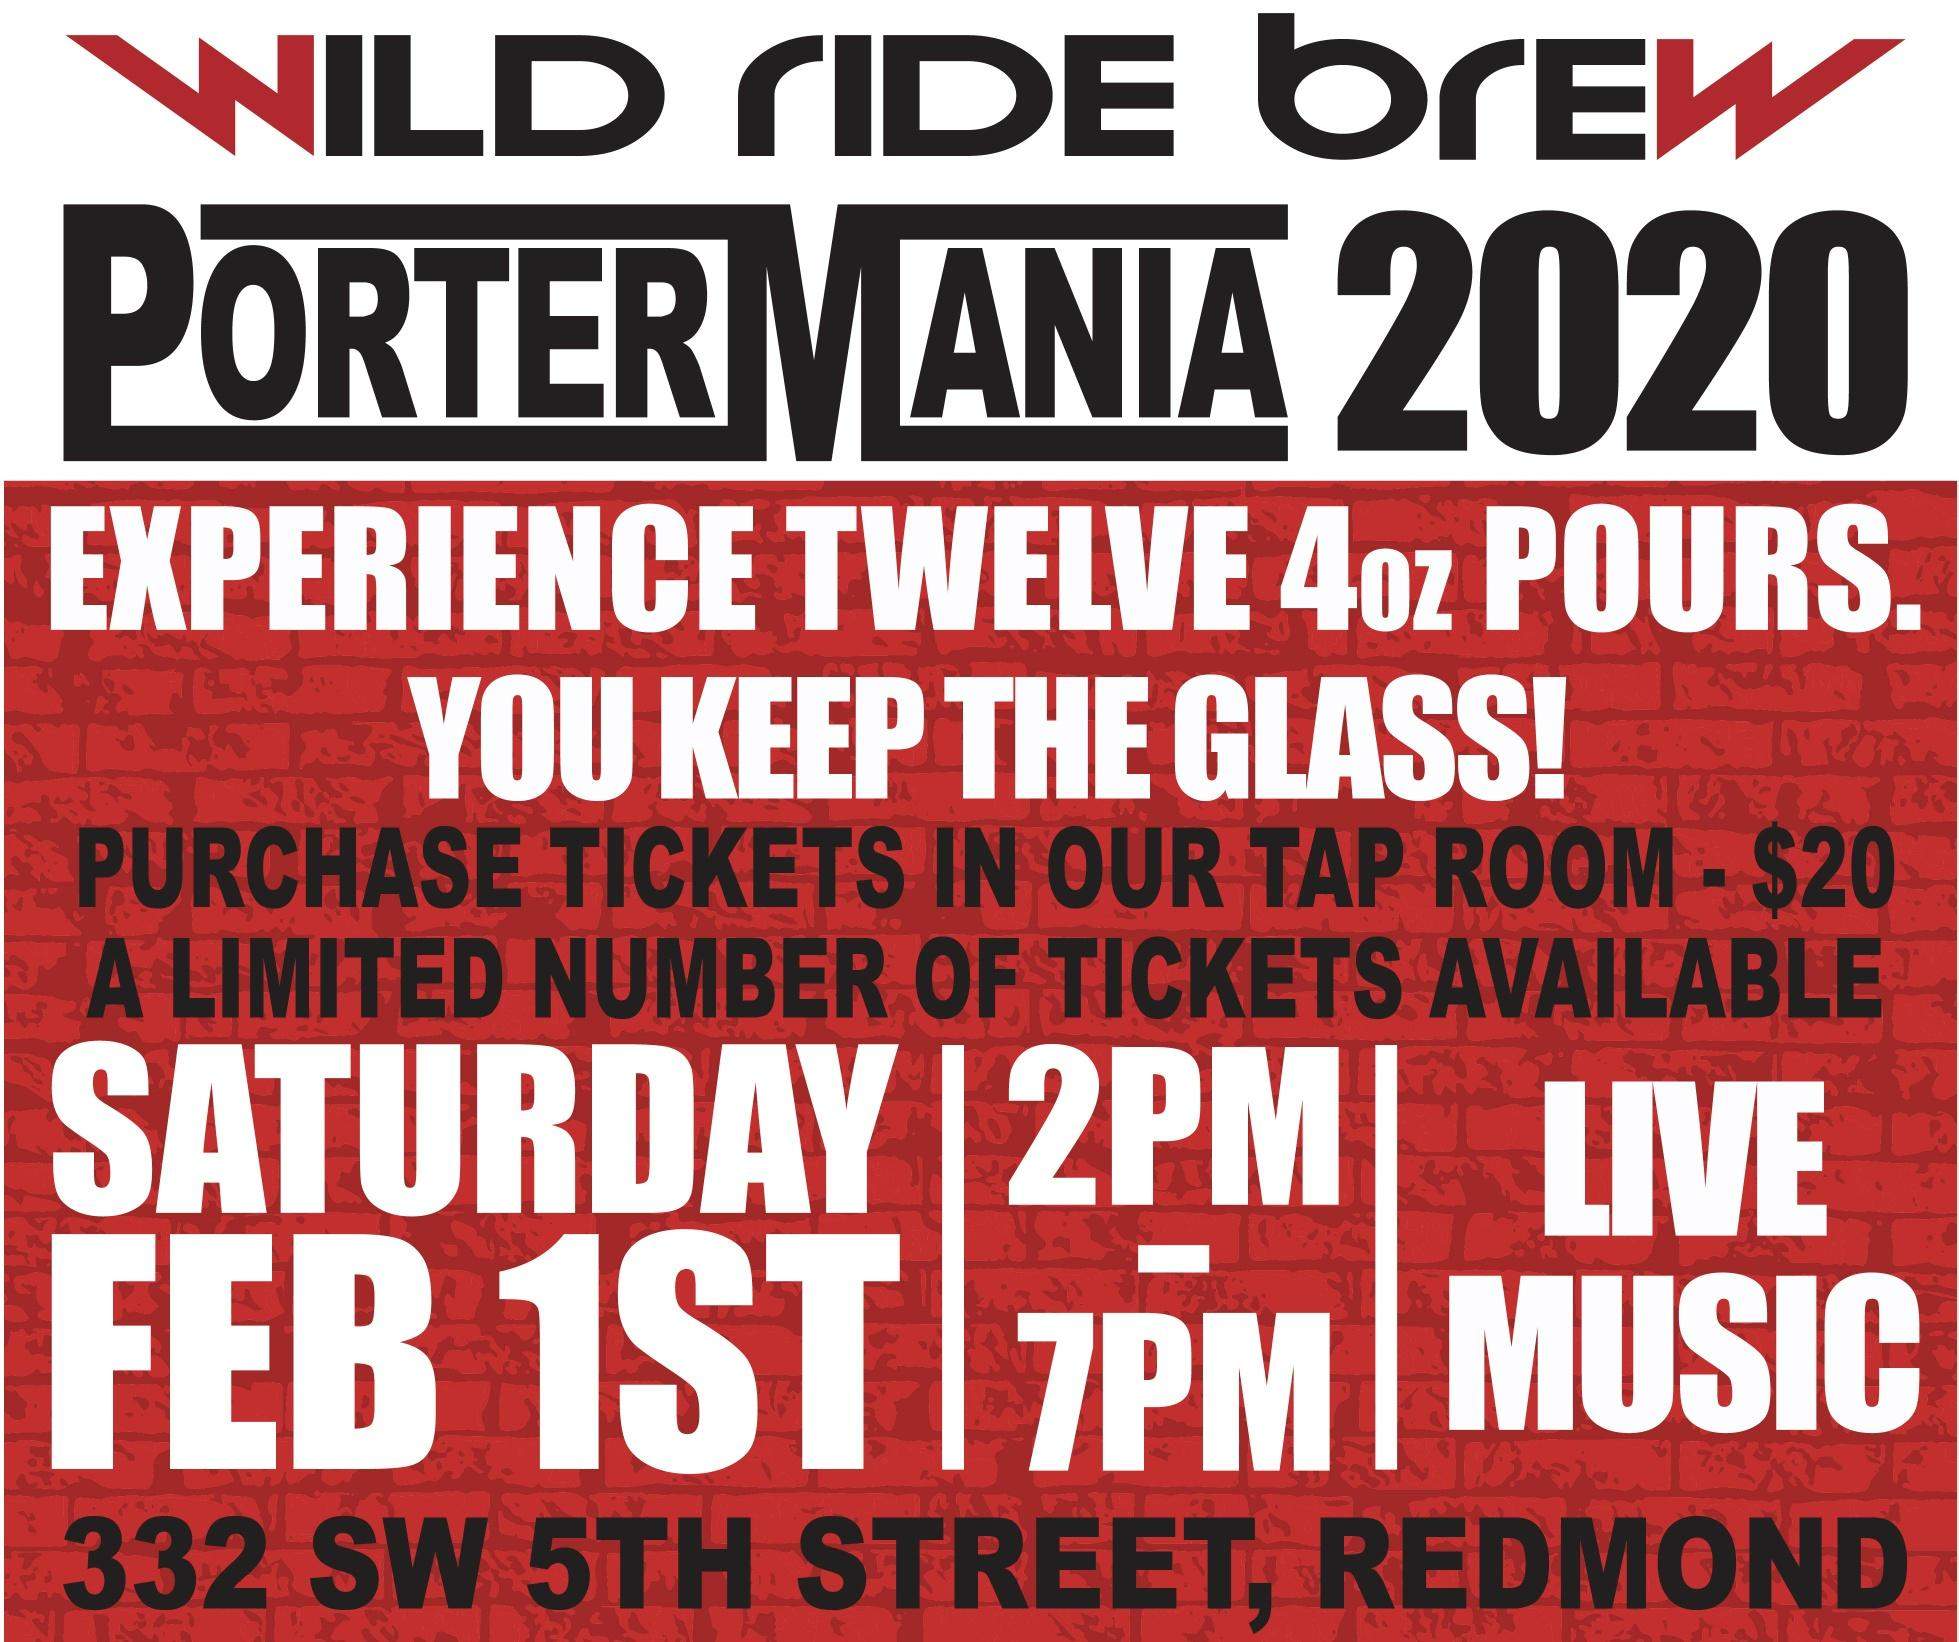 Wild Ride Brewing PorterMania 2020